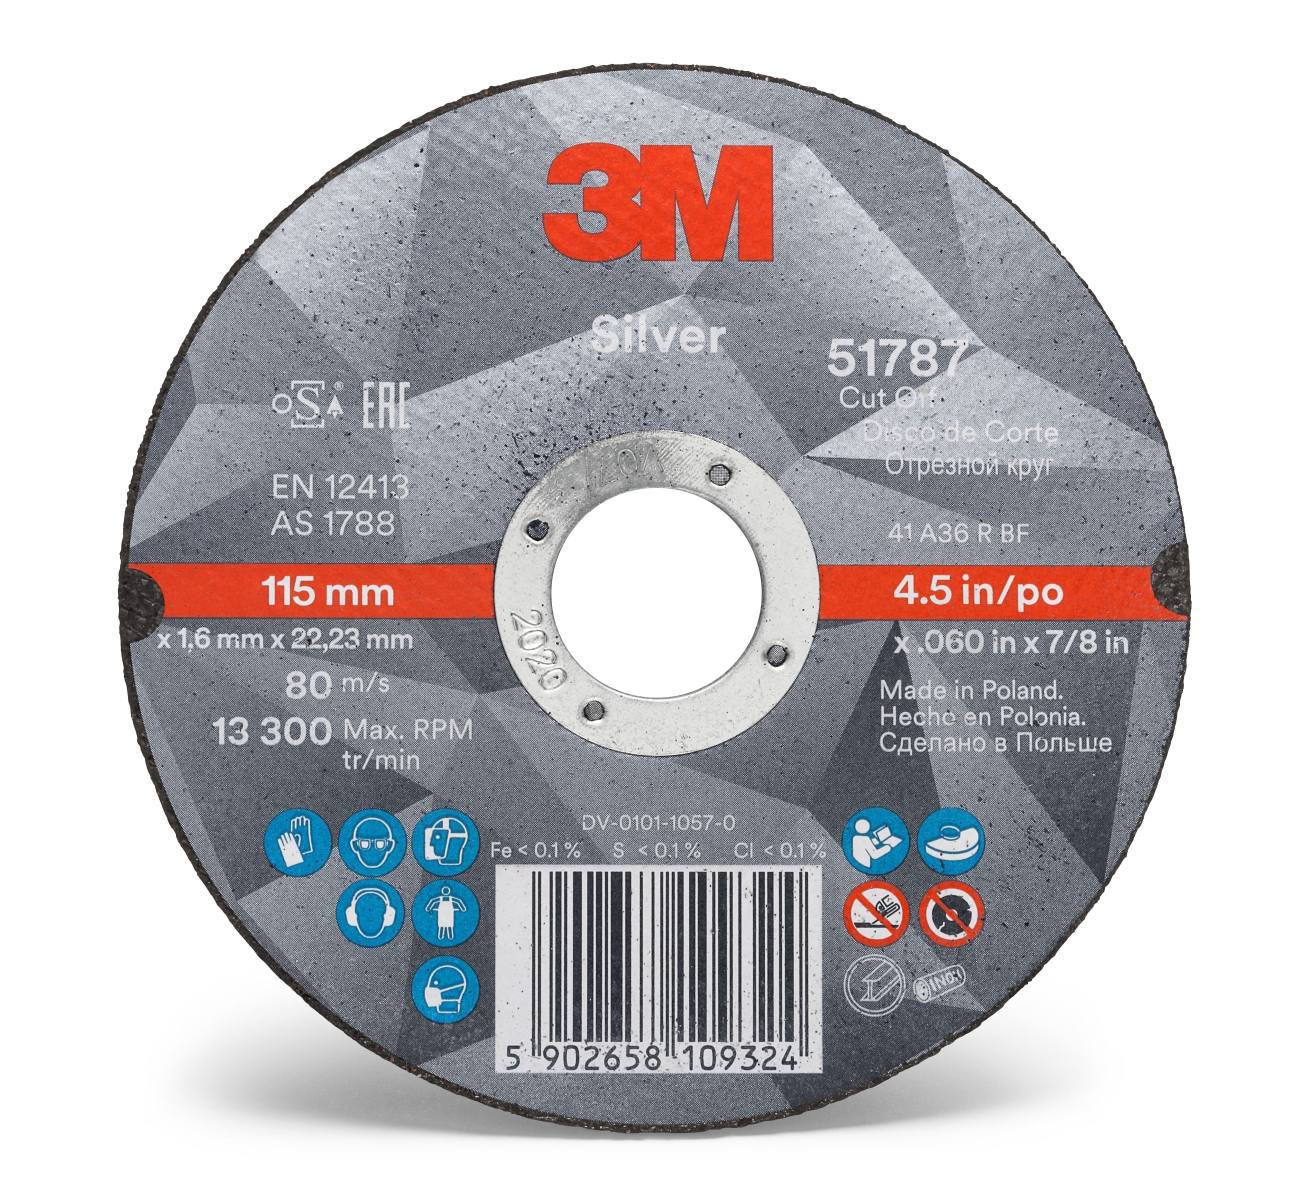 3M Silver Cut-Off Wheel Trennscheibe, 180 mm, 2,5 mm, 22,23 mm, T42, 51802